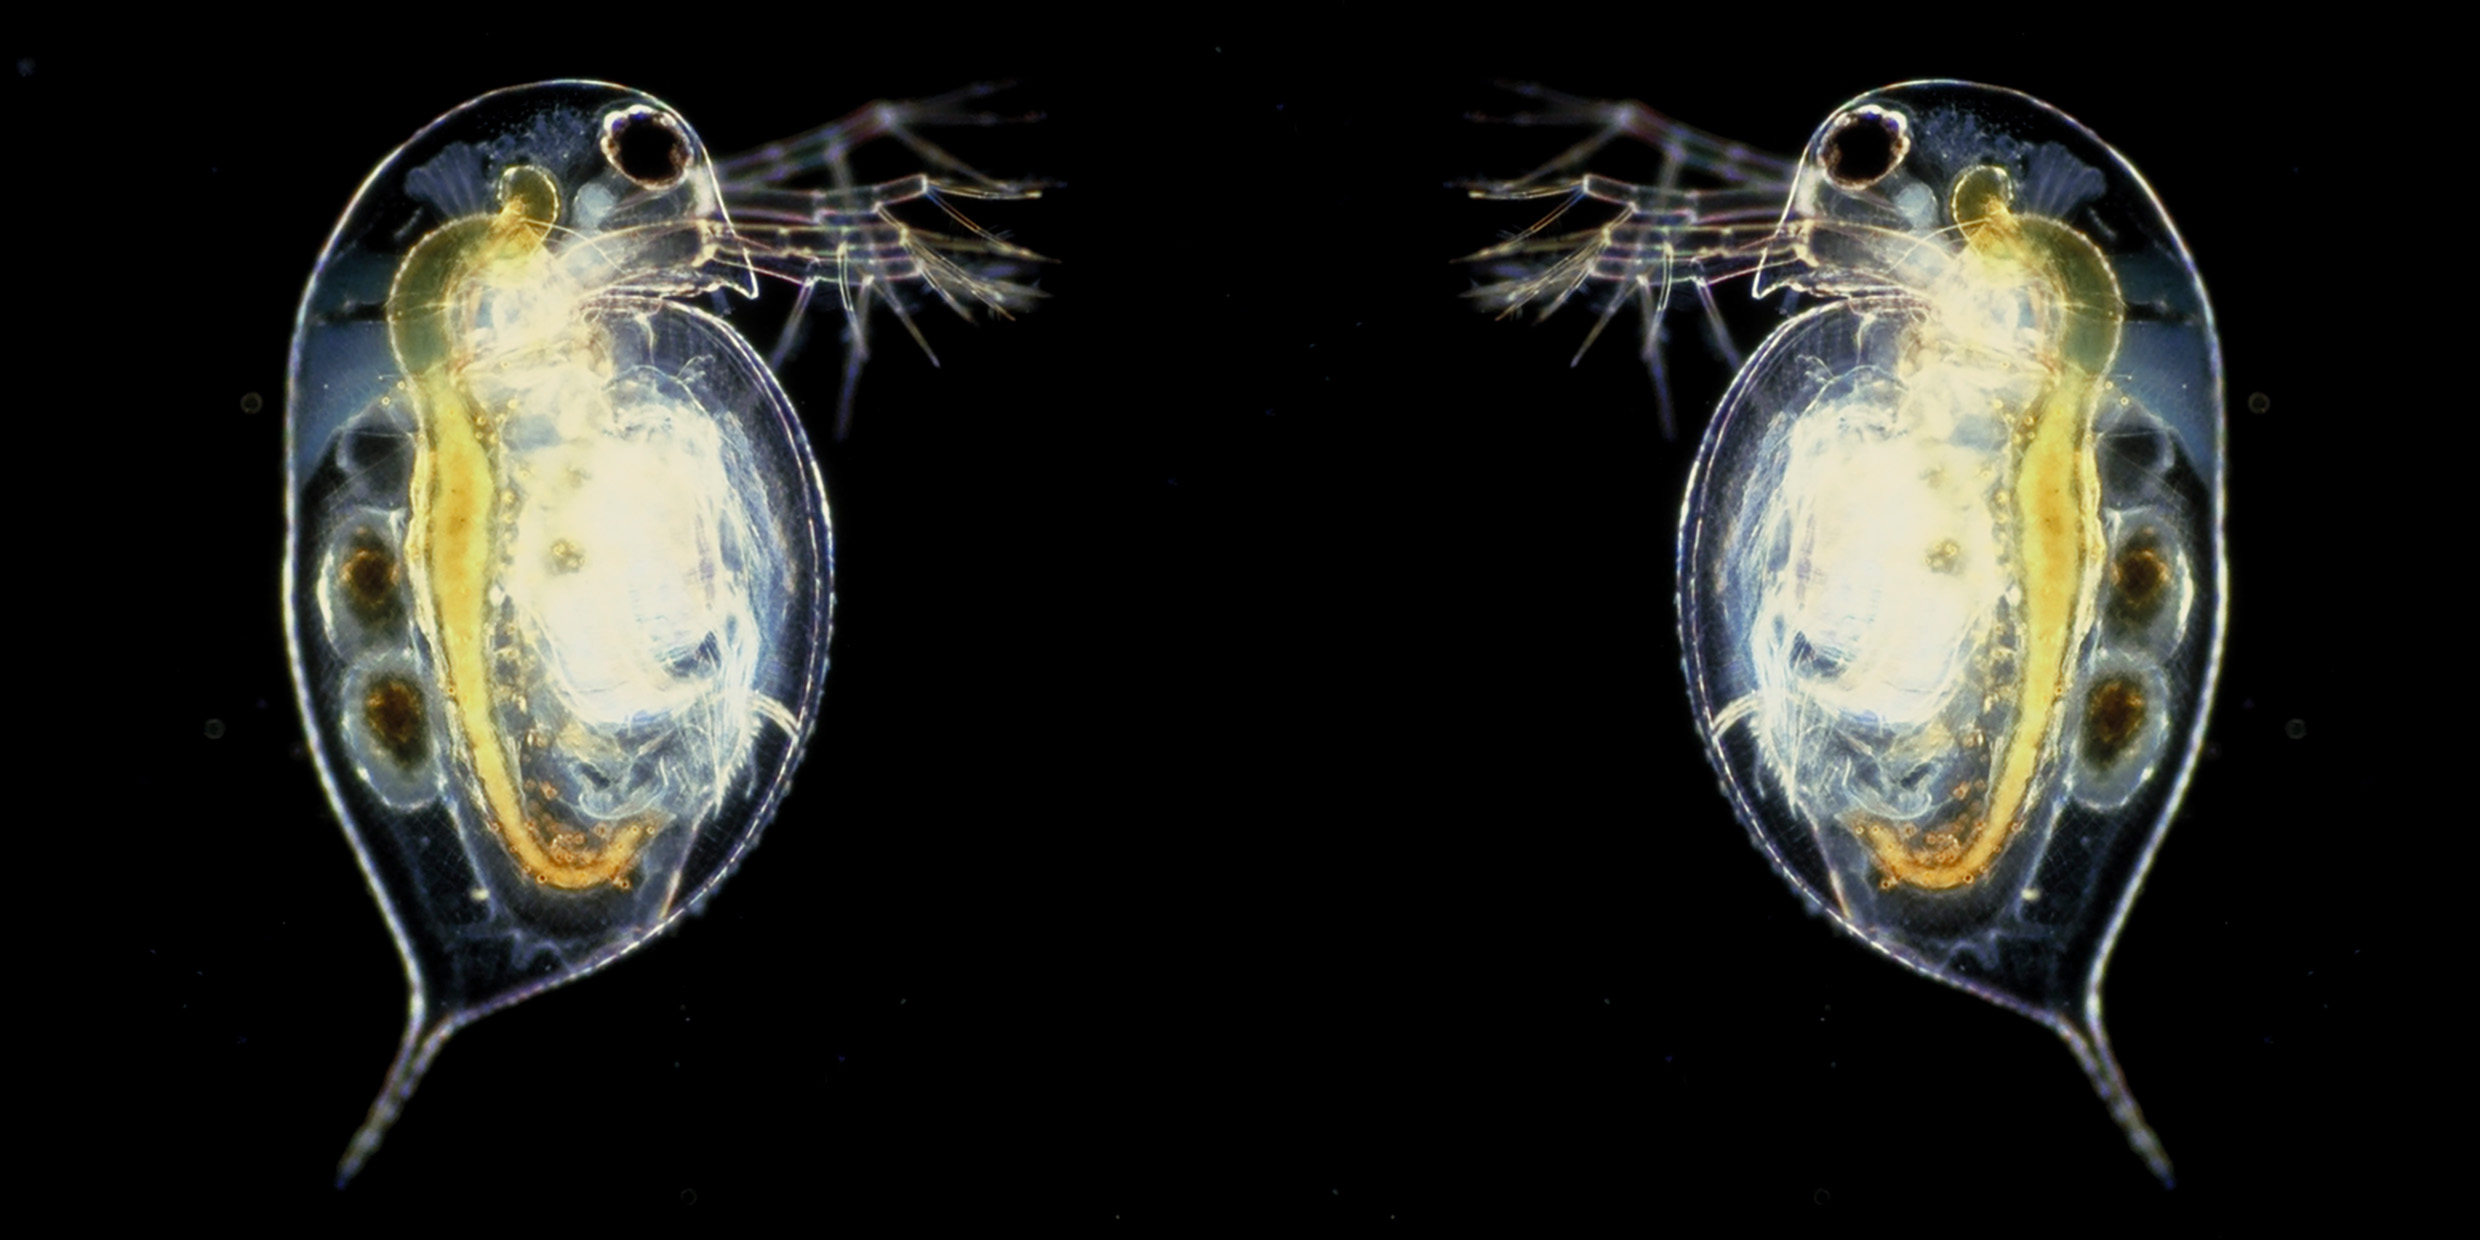 Mirrored image of a microscopic water flea